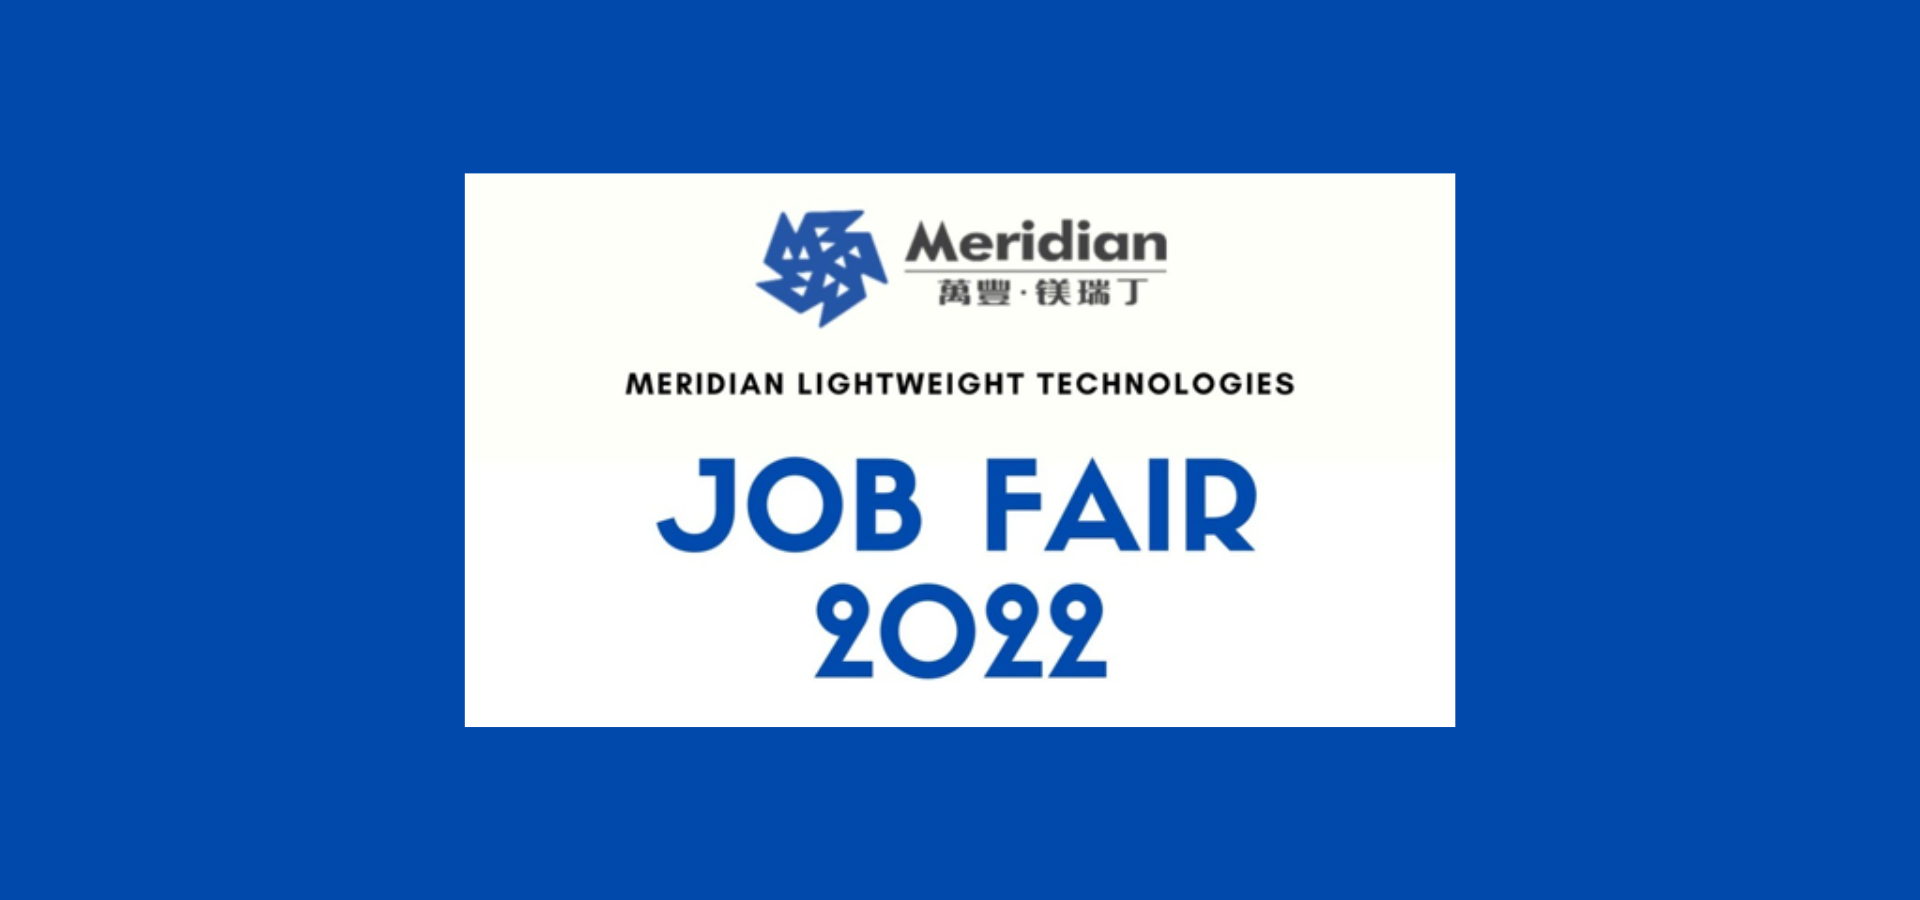 Meridian Lightweight Technologies Job Fair London Economic